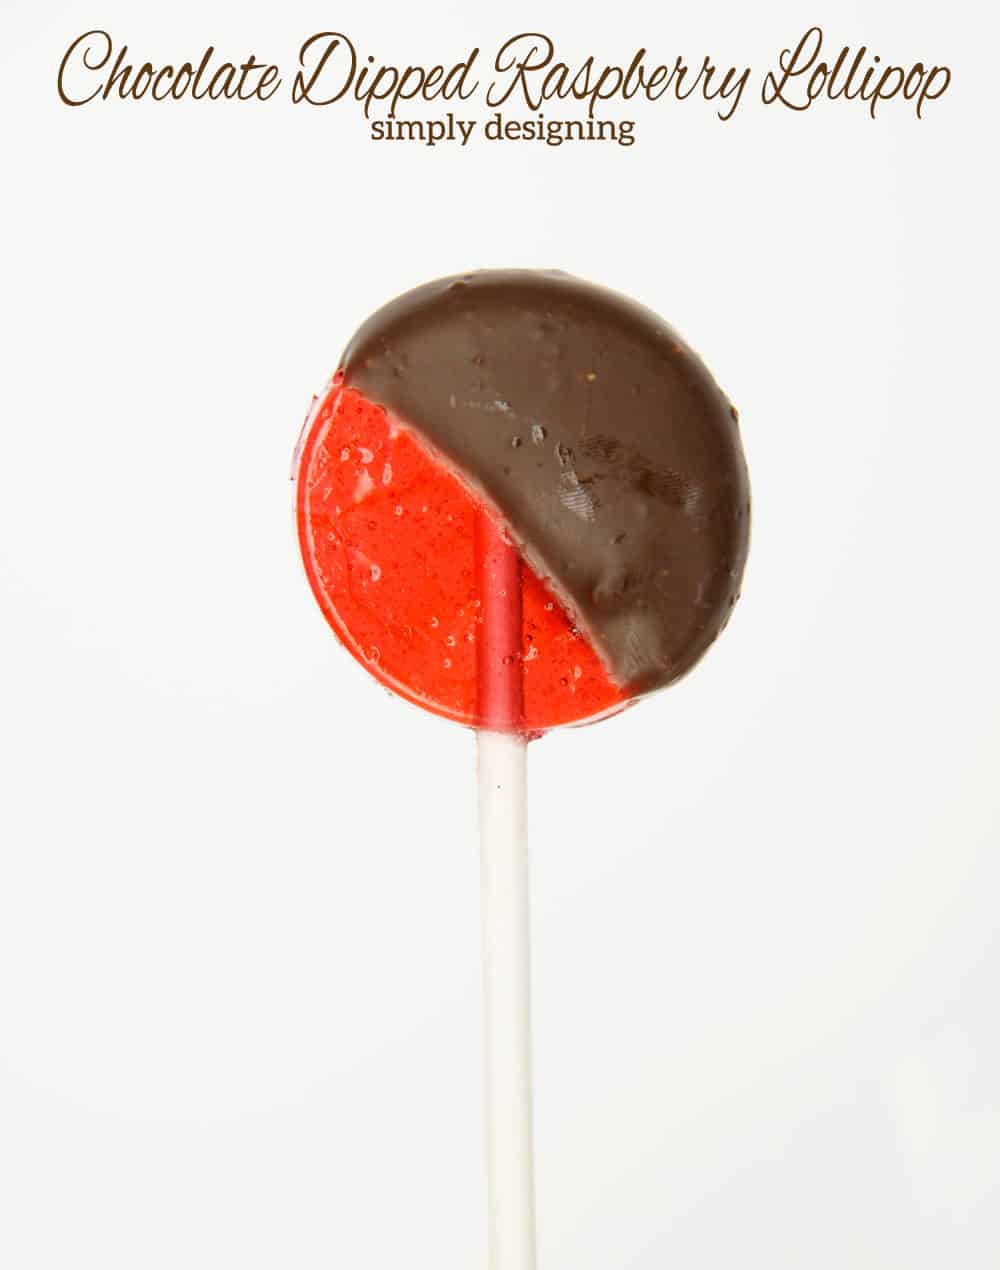 chocolate+dipped+raspberry+lollipops1 | Chocolate-Dipped Raspberry Lollipops | 22 | 5 Must-Have Tech Gifts